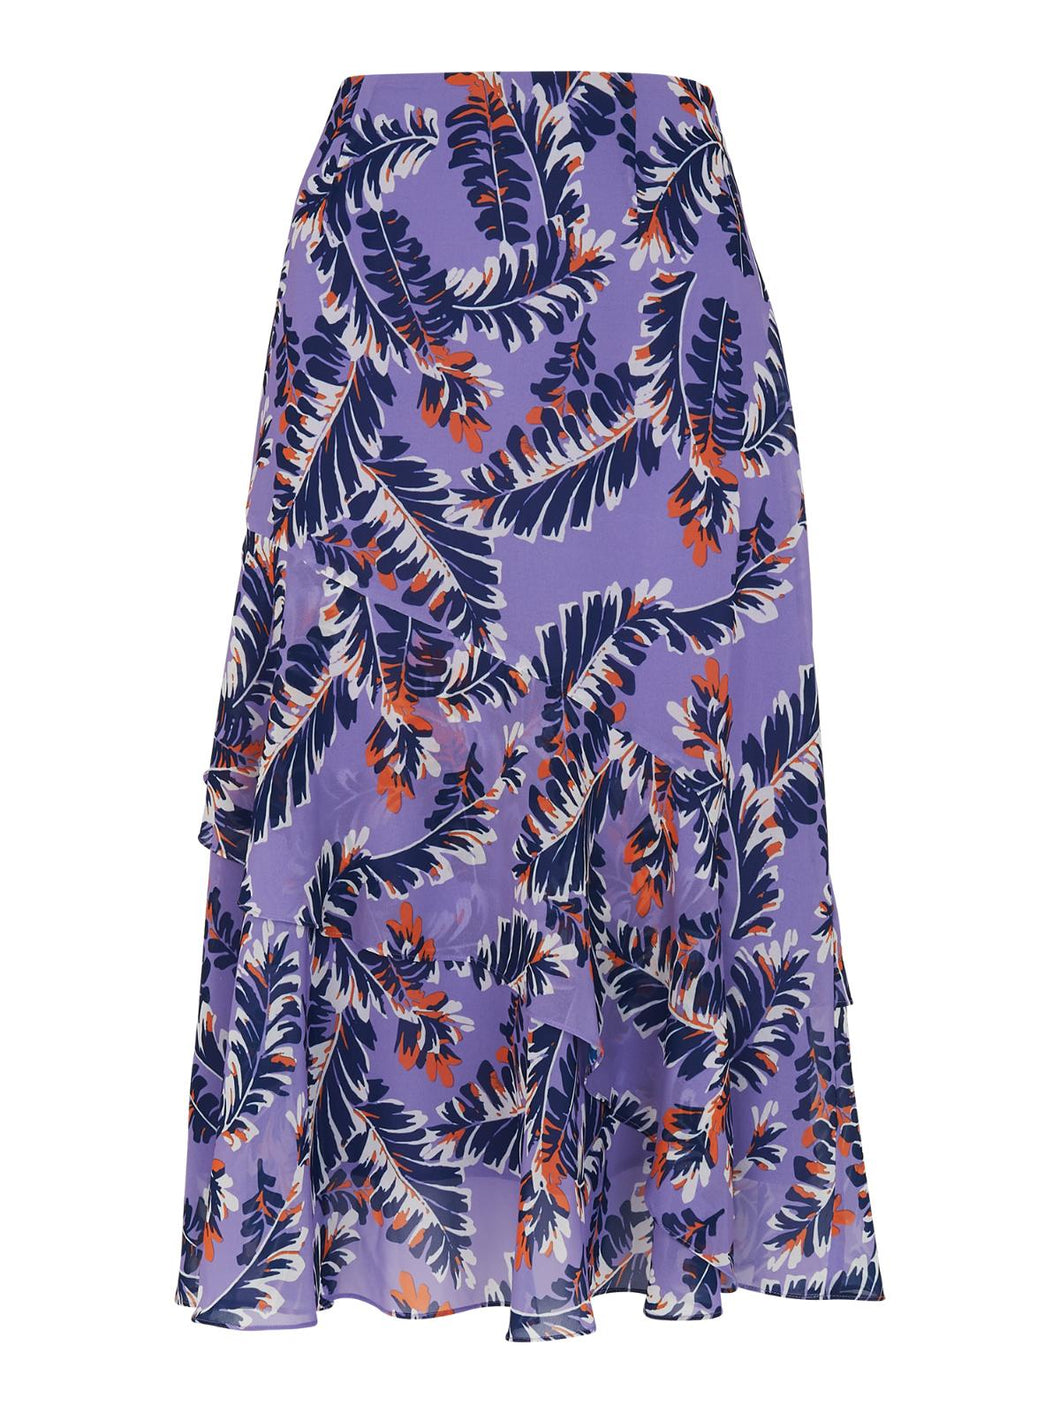 WHISTLES Ladies Josephine Print Frill Skirt Purple Multi UK6 BNWT RRP139